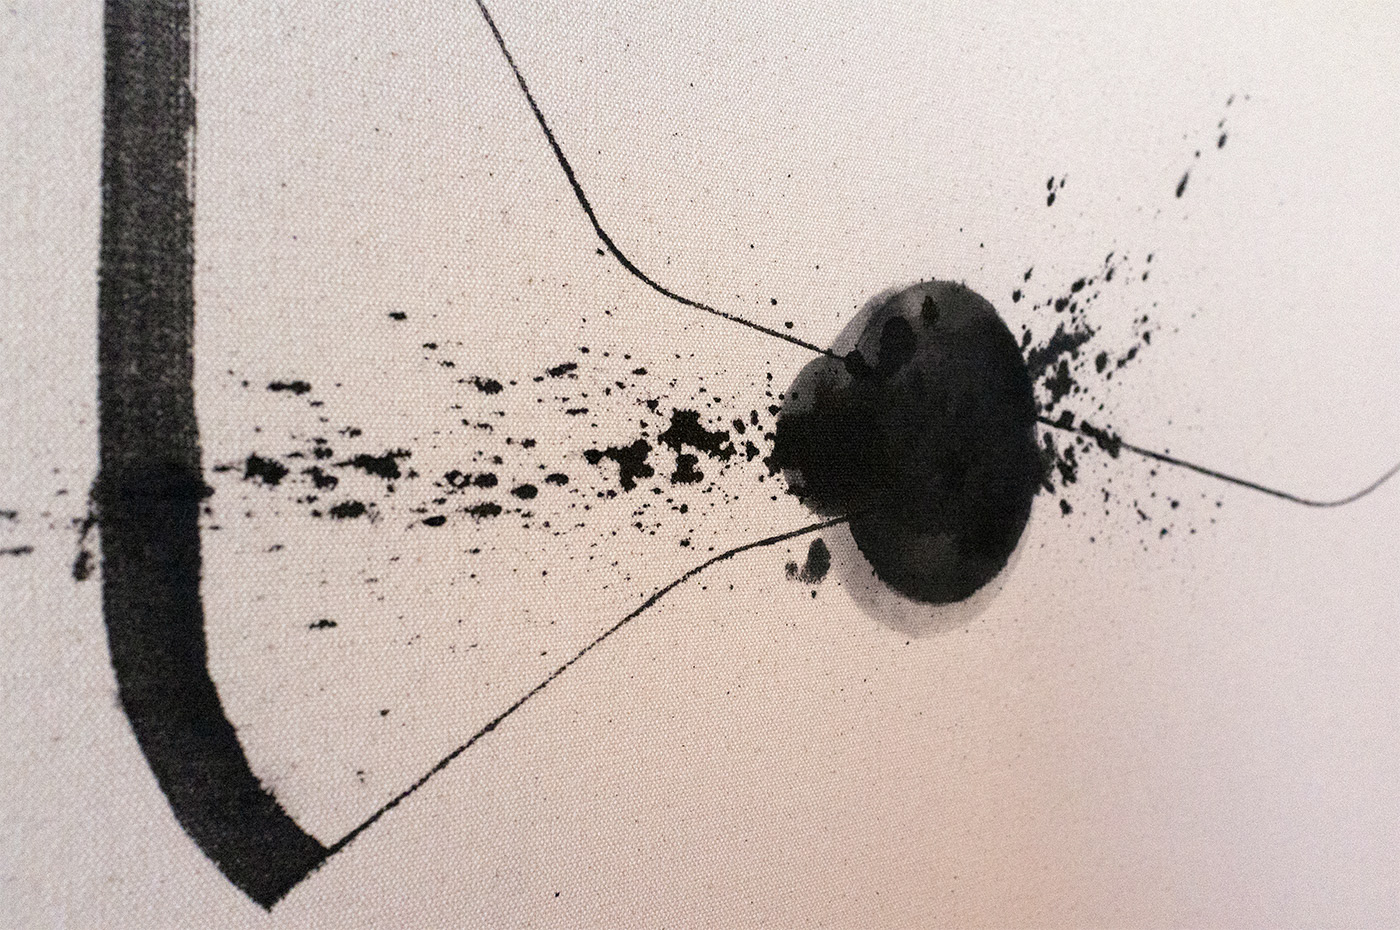 ink raw canvas abstract minimalist Minimalism black darkness negative space